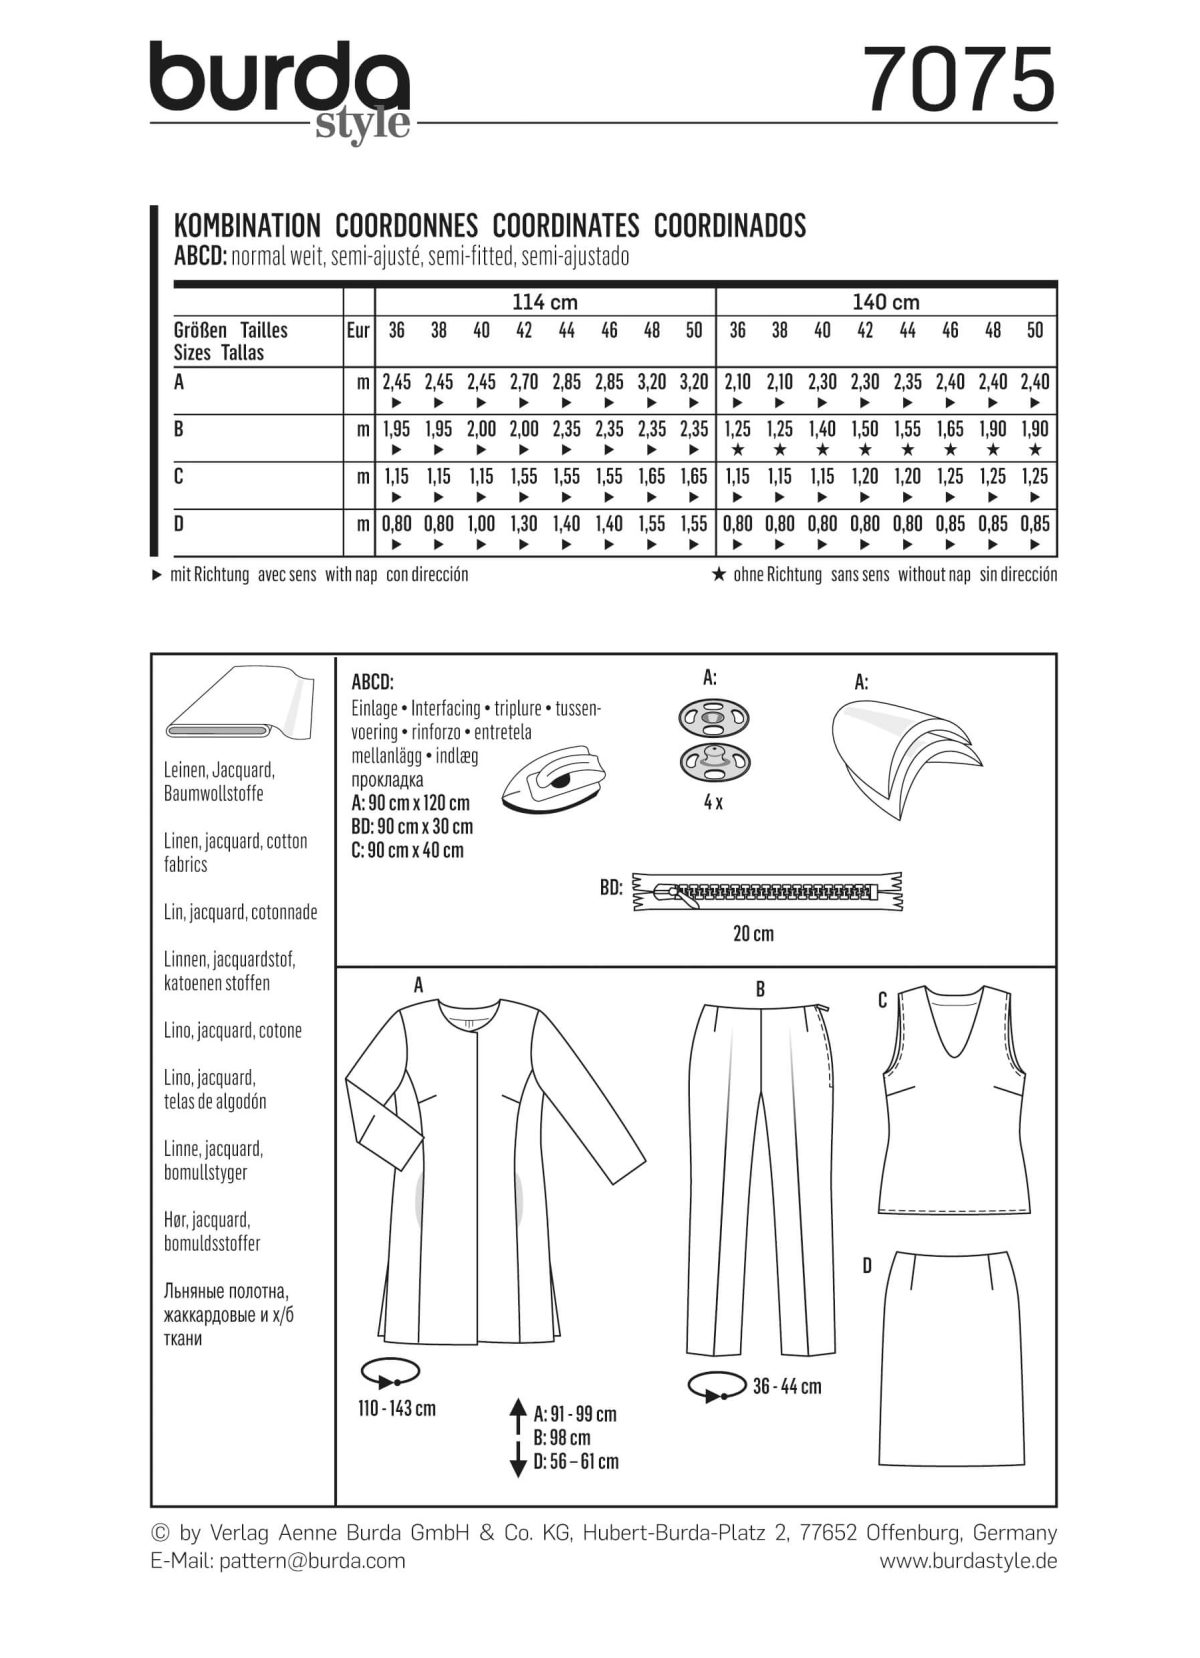 Burda B7075 Burda Style Coordinates Sewing Pattern